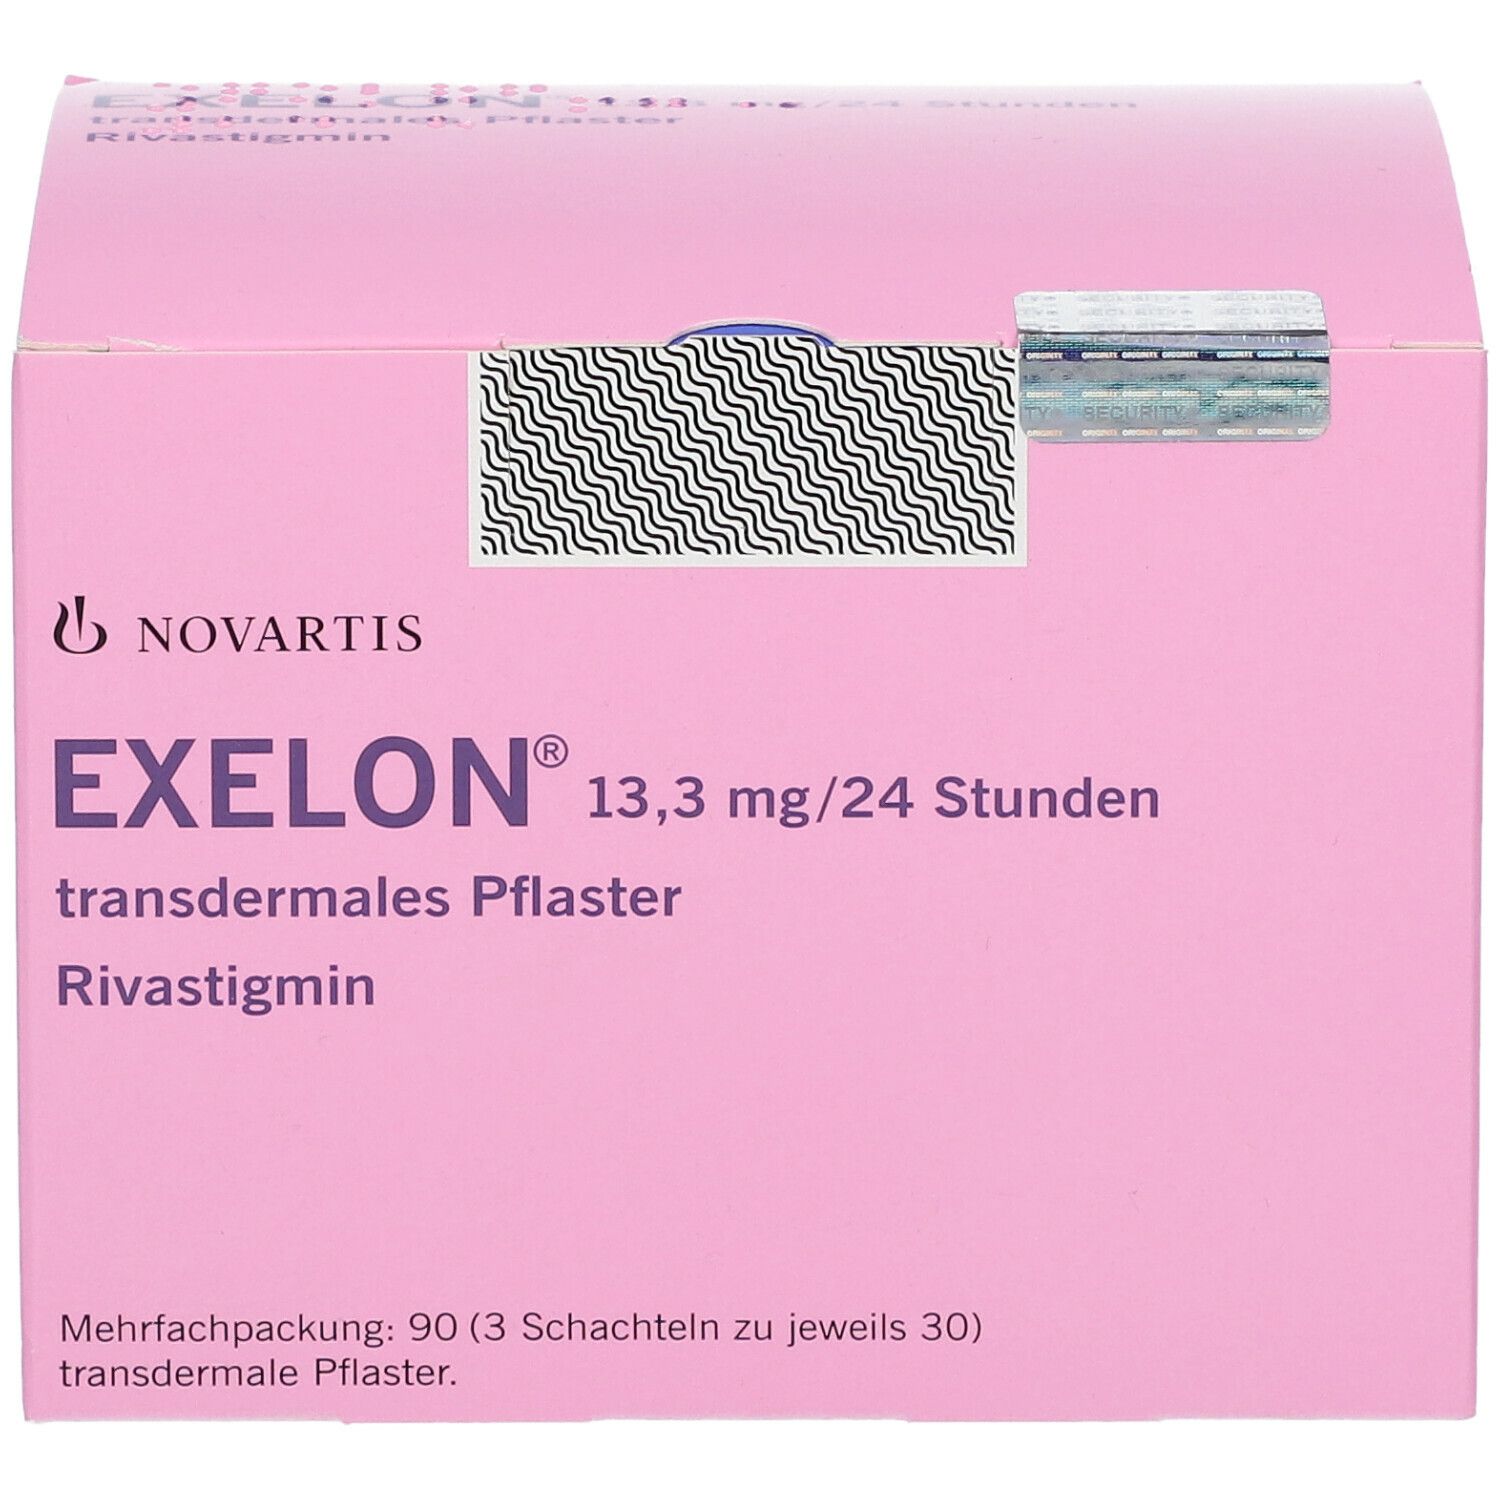 Exelon® 13,3 mg/24 Stunden